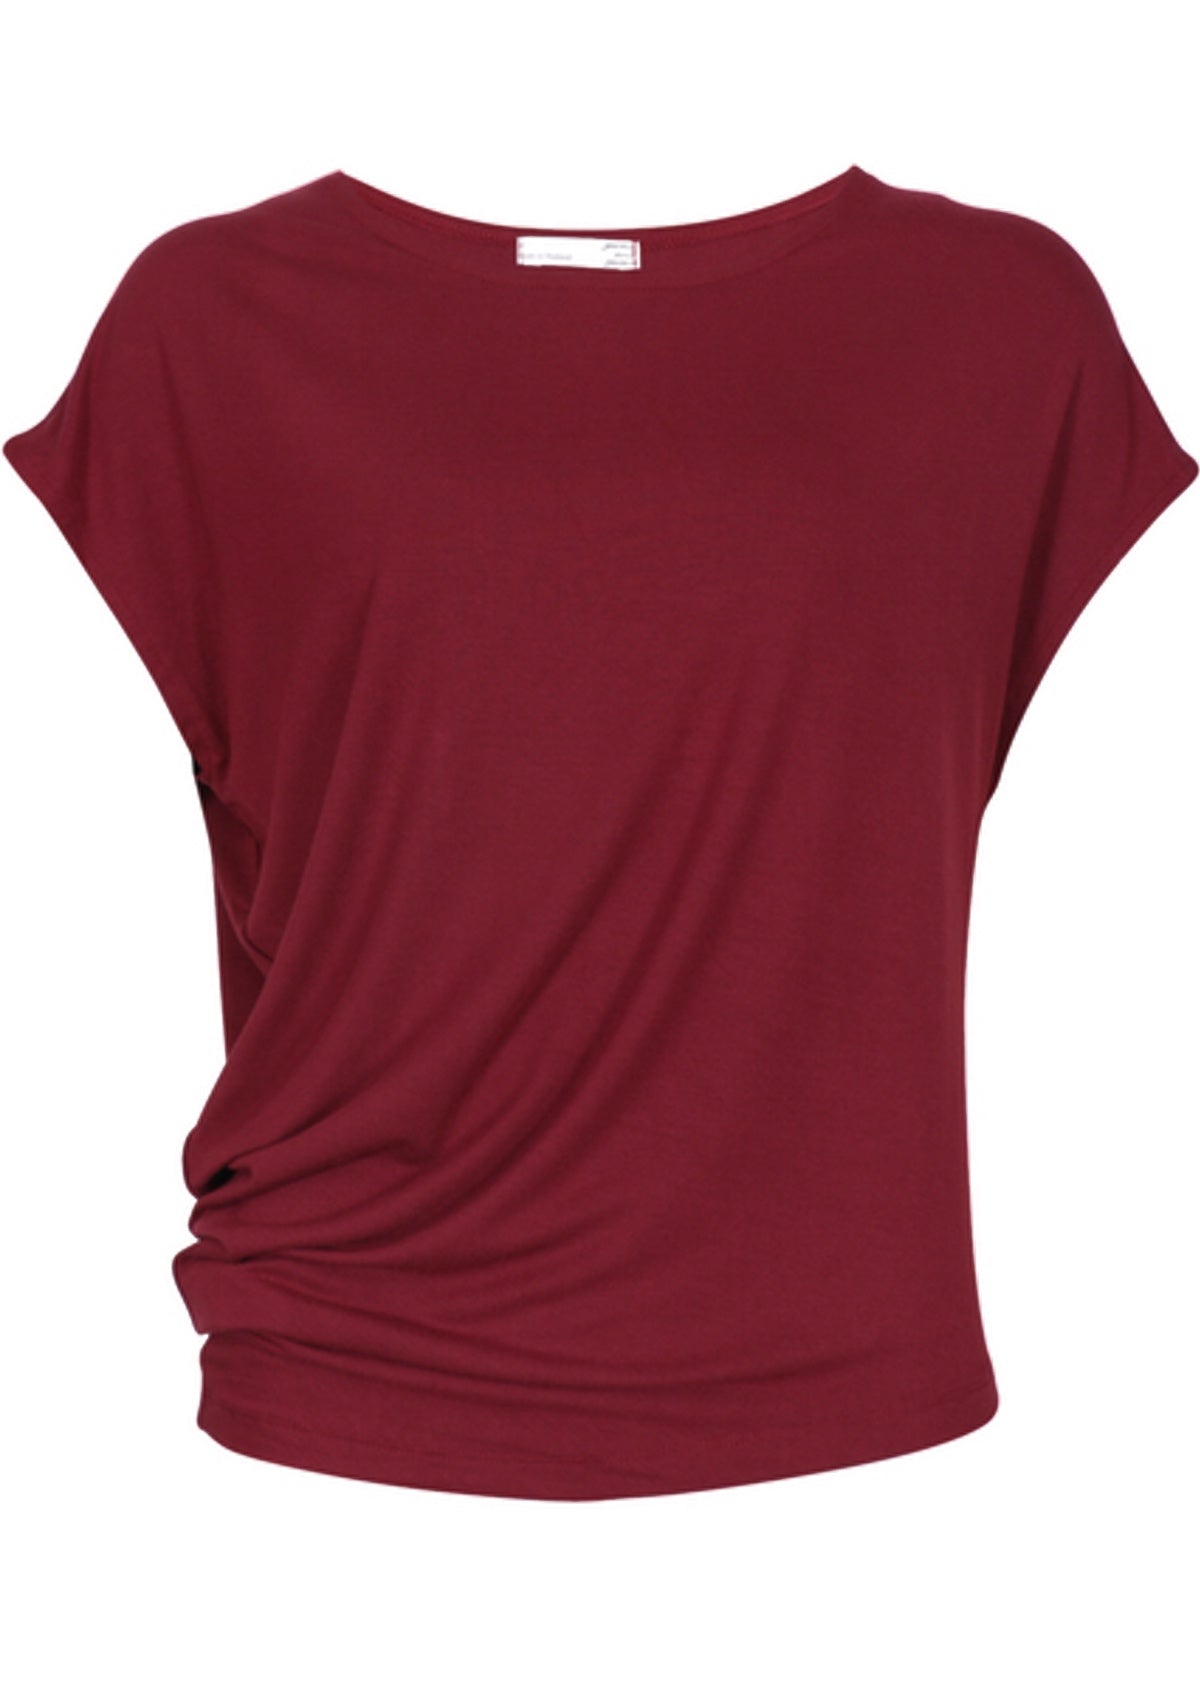 short sleeve women's rayon top in maroon 